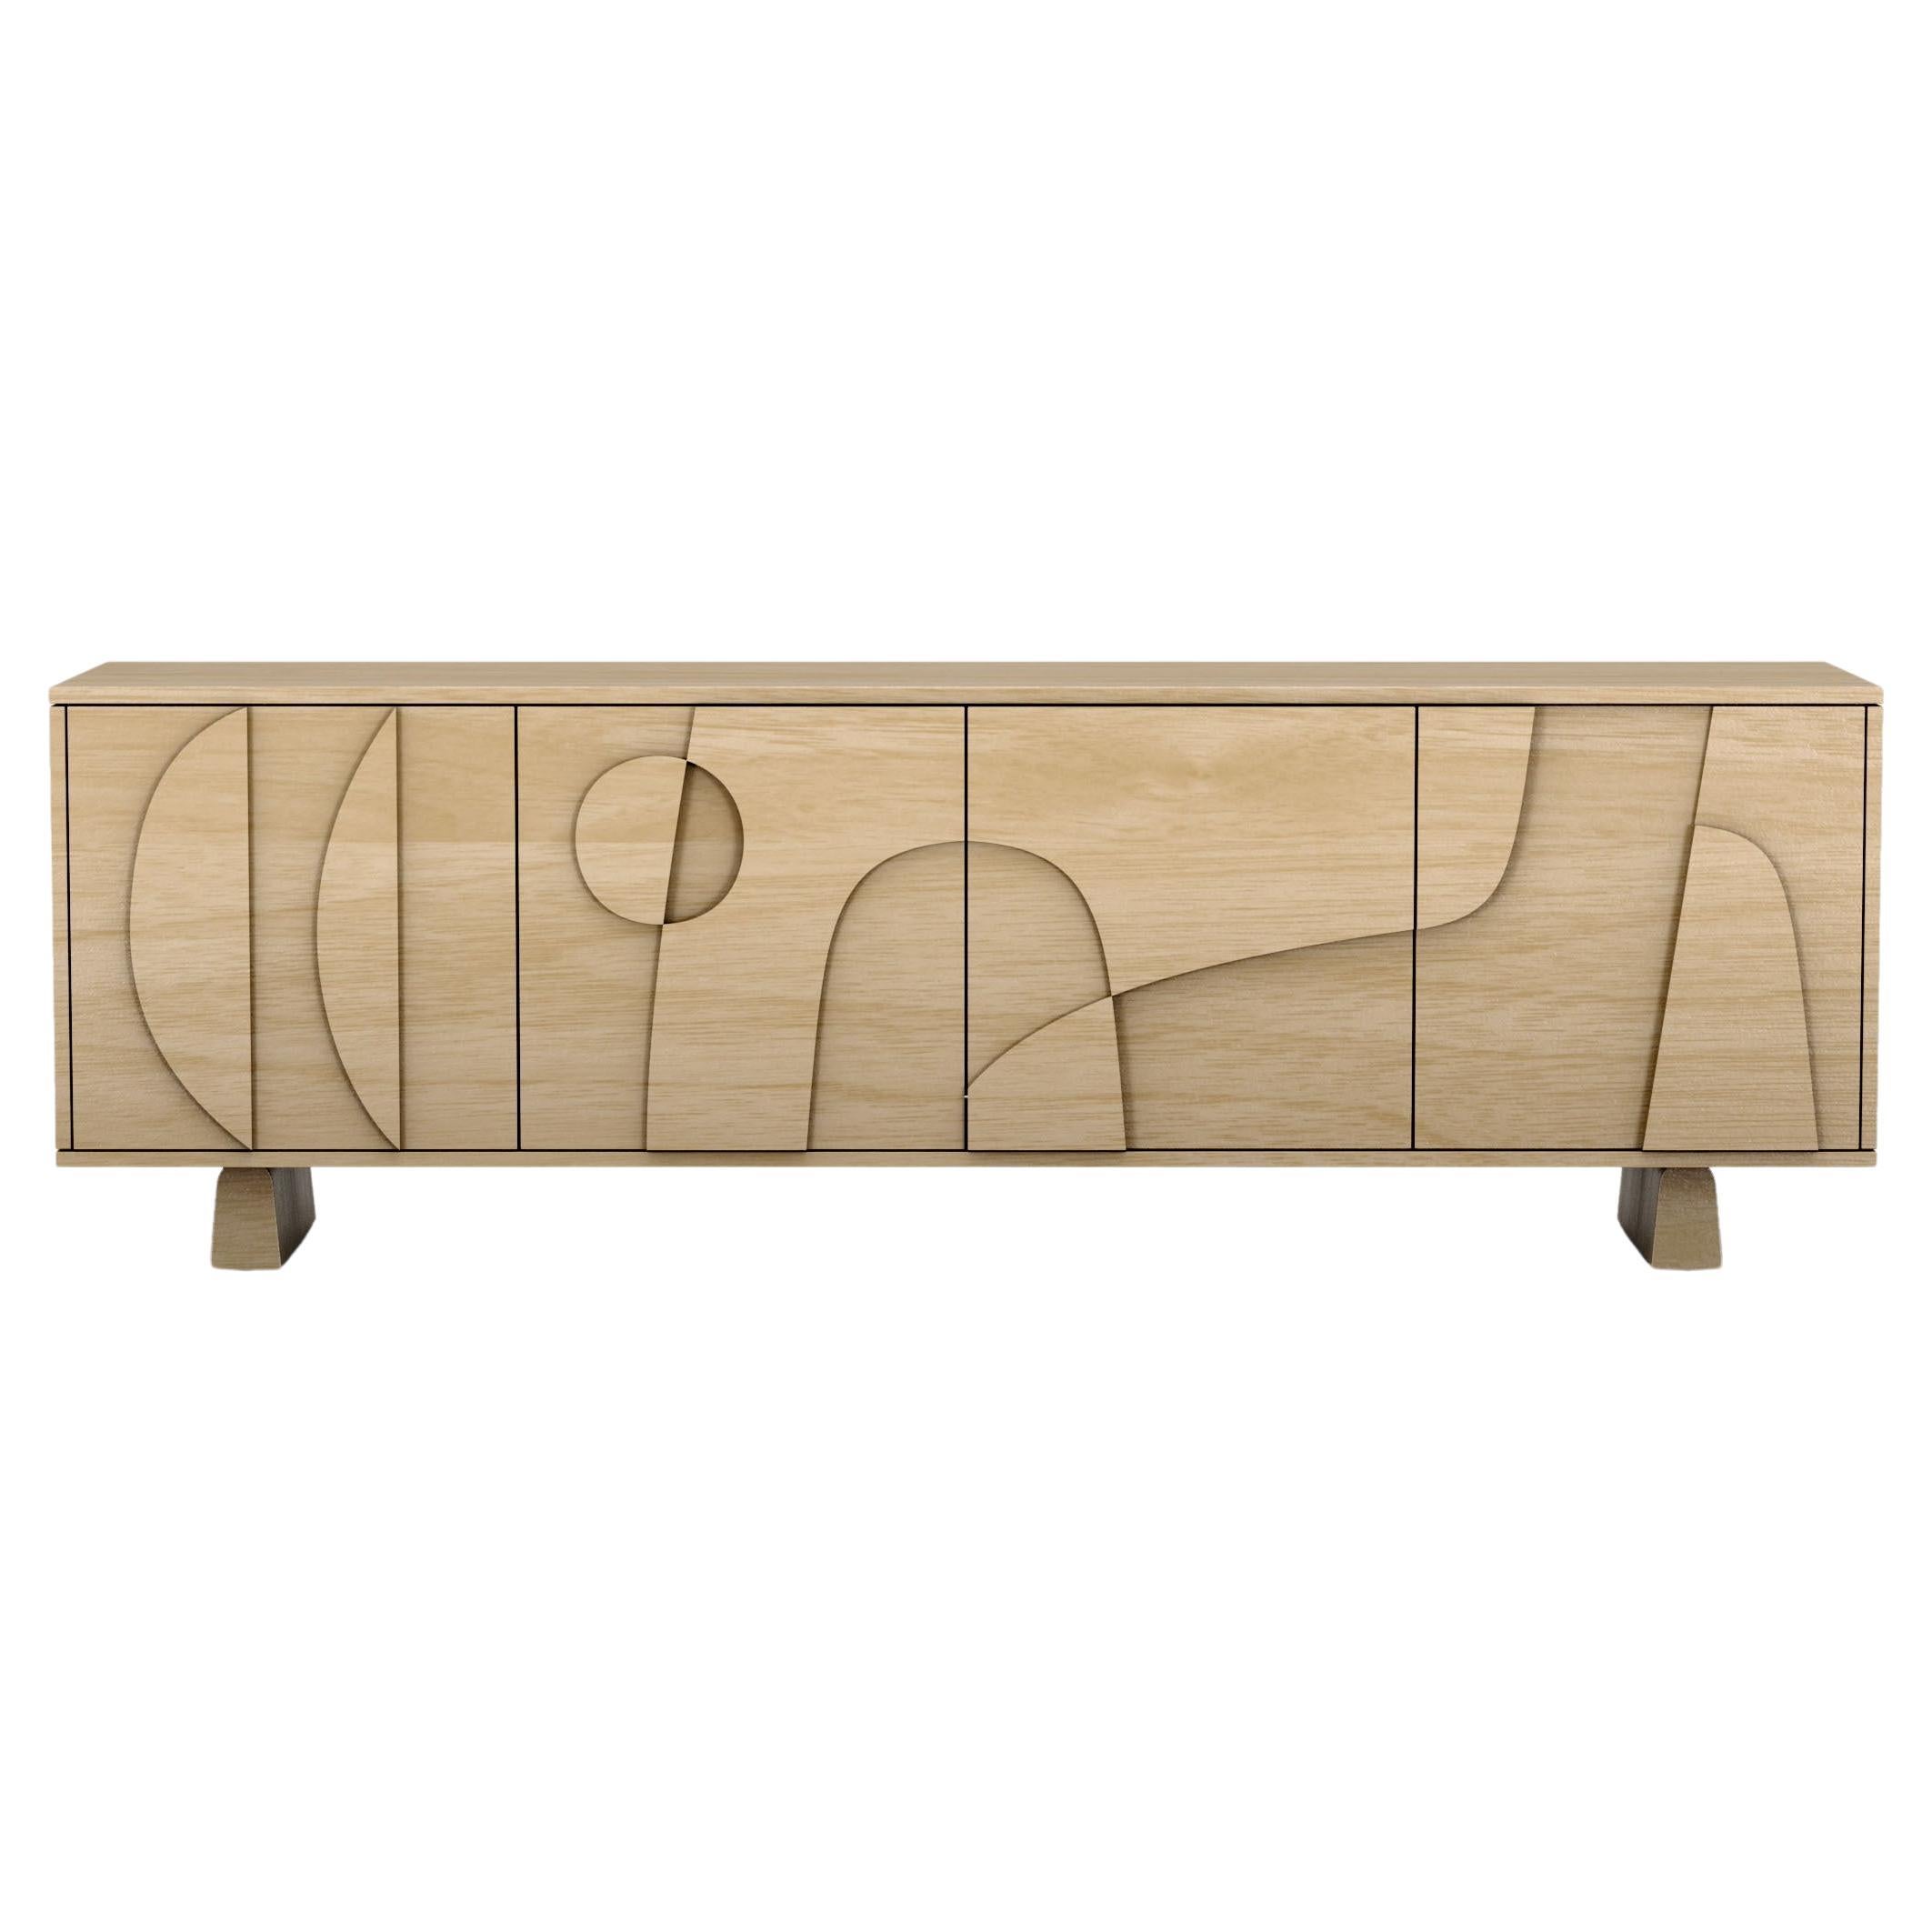 Contemporary 'Wynwood' 4 Sideboard by Man of Parts, Nude Oak, Short Legs